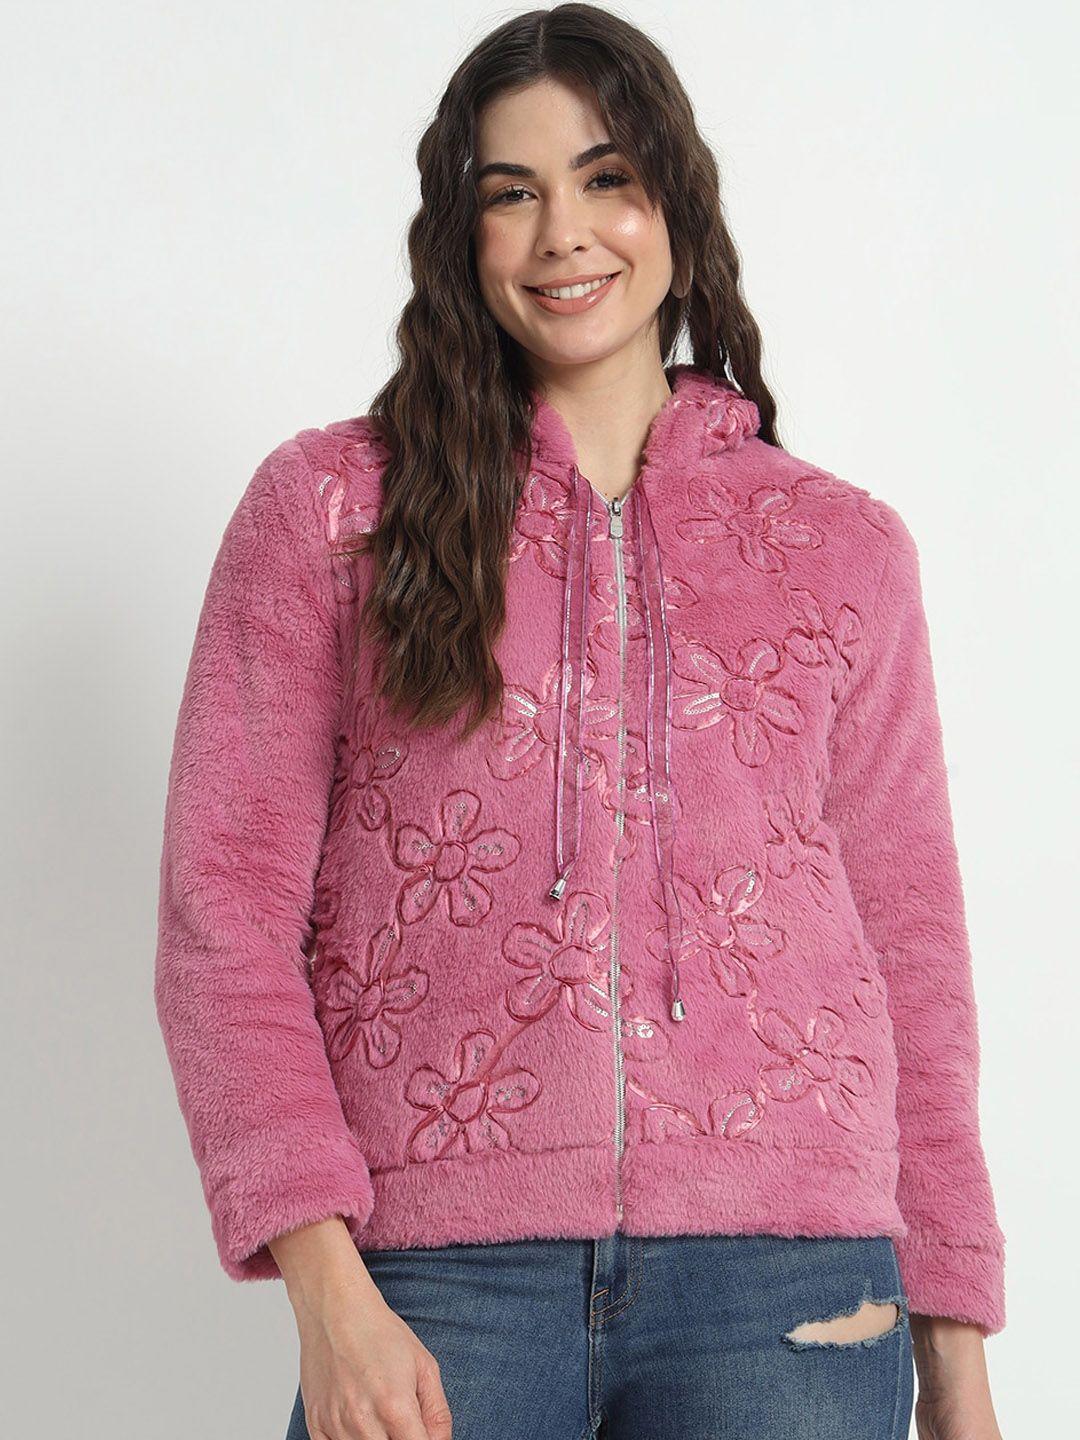 raer women geometric lightweight crop tailored jacket embroidered